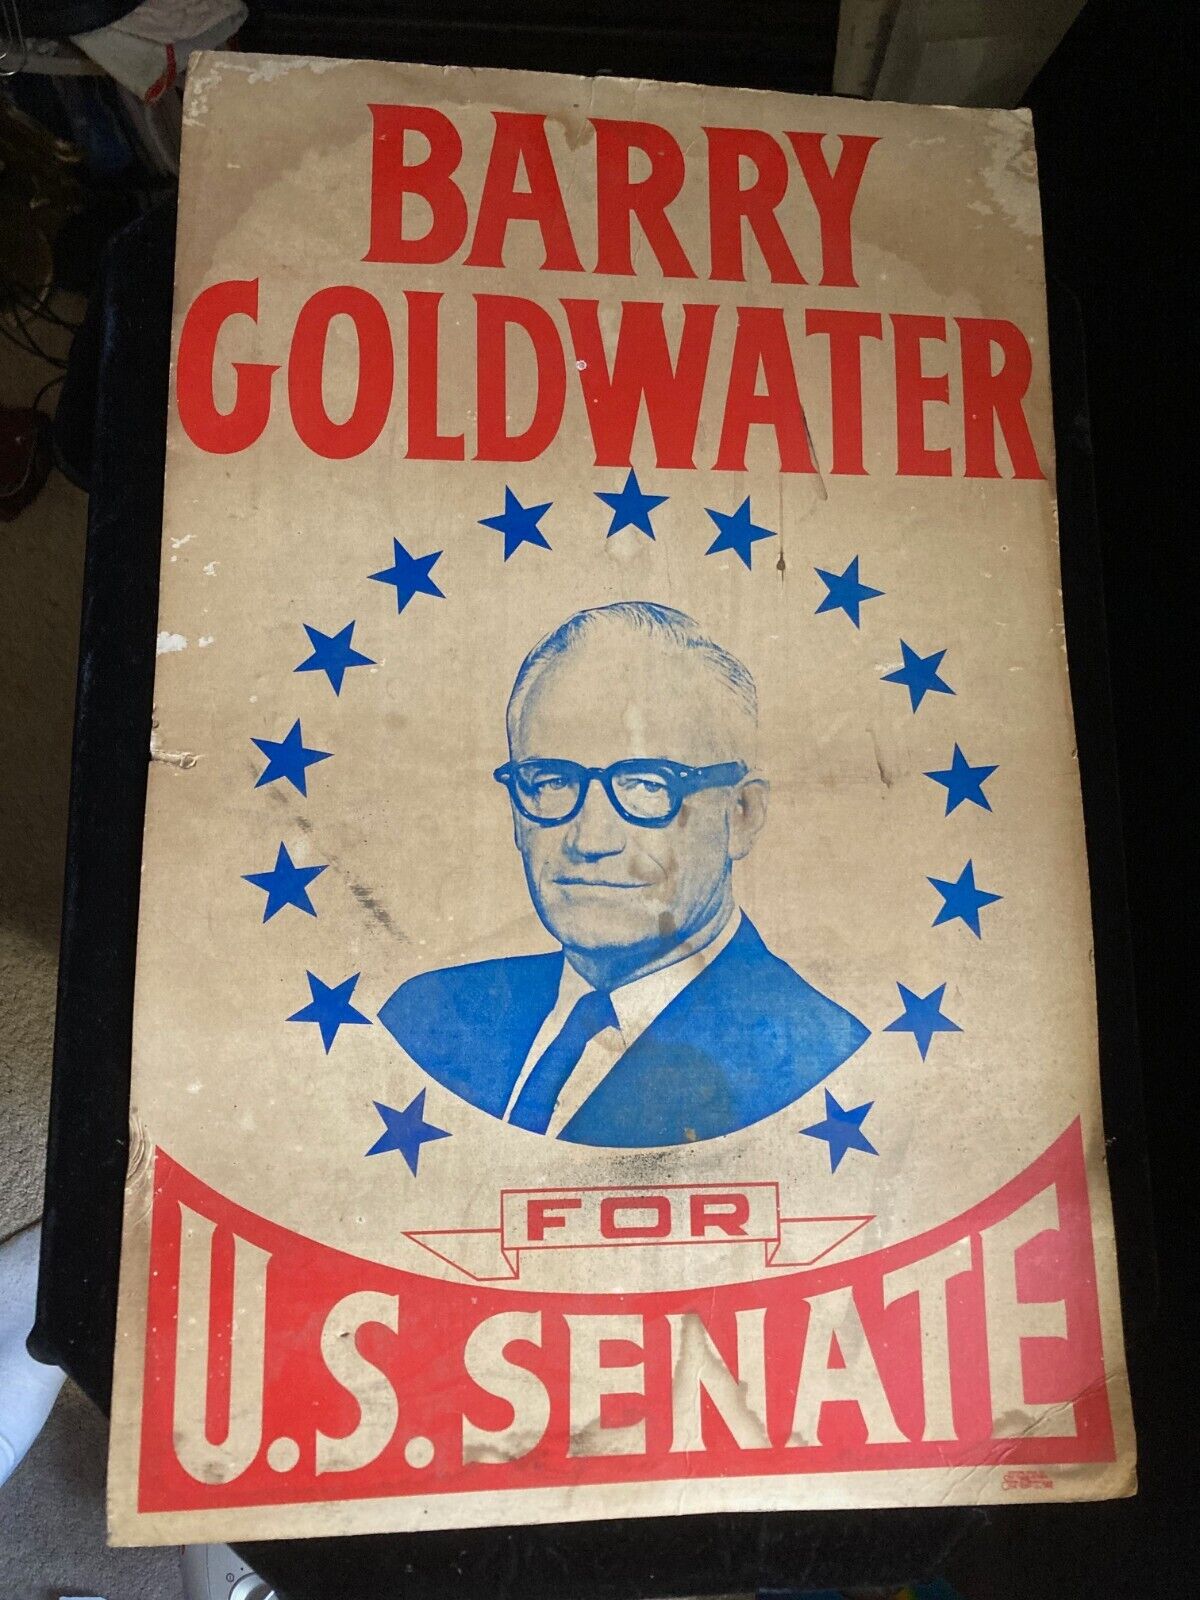 Barry Goldwater for US Senate poster 14X22 vintage rare  estate find